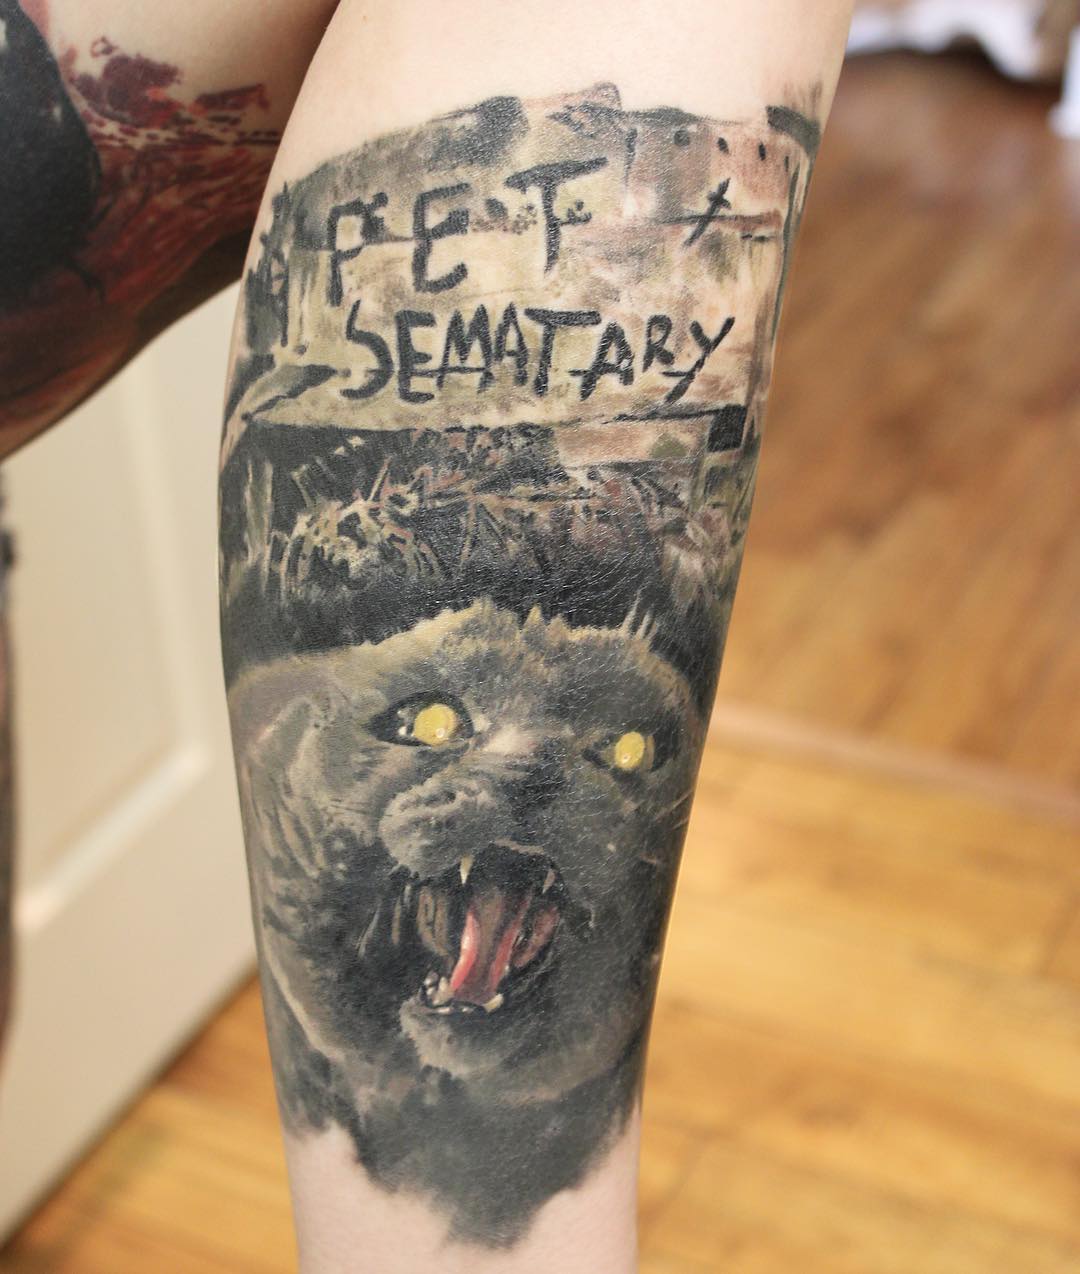 Pet Sematary tattoo by requiemtattoo.